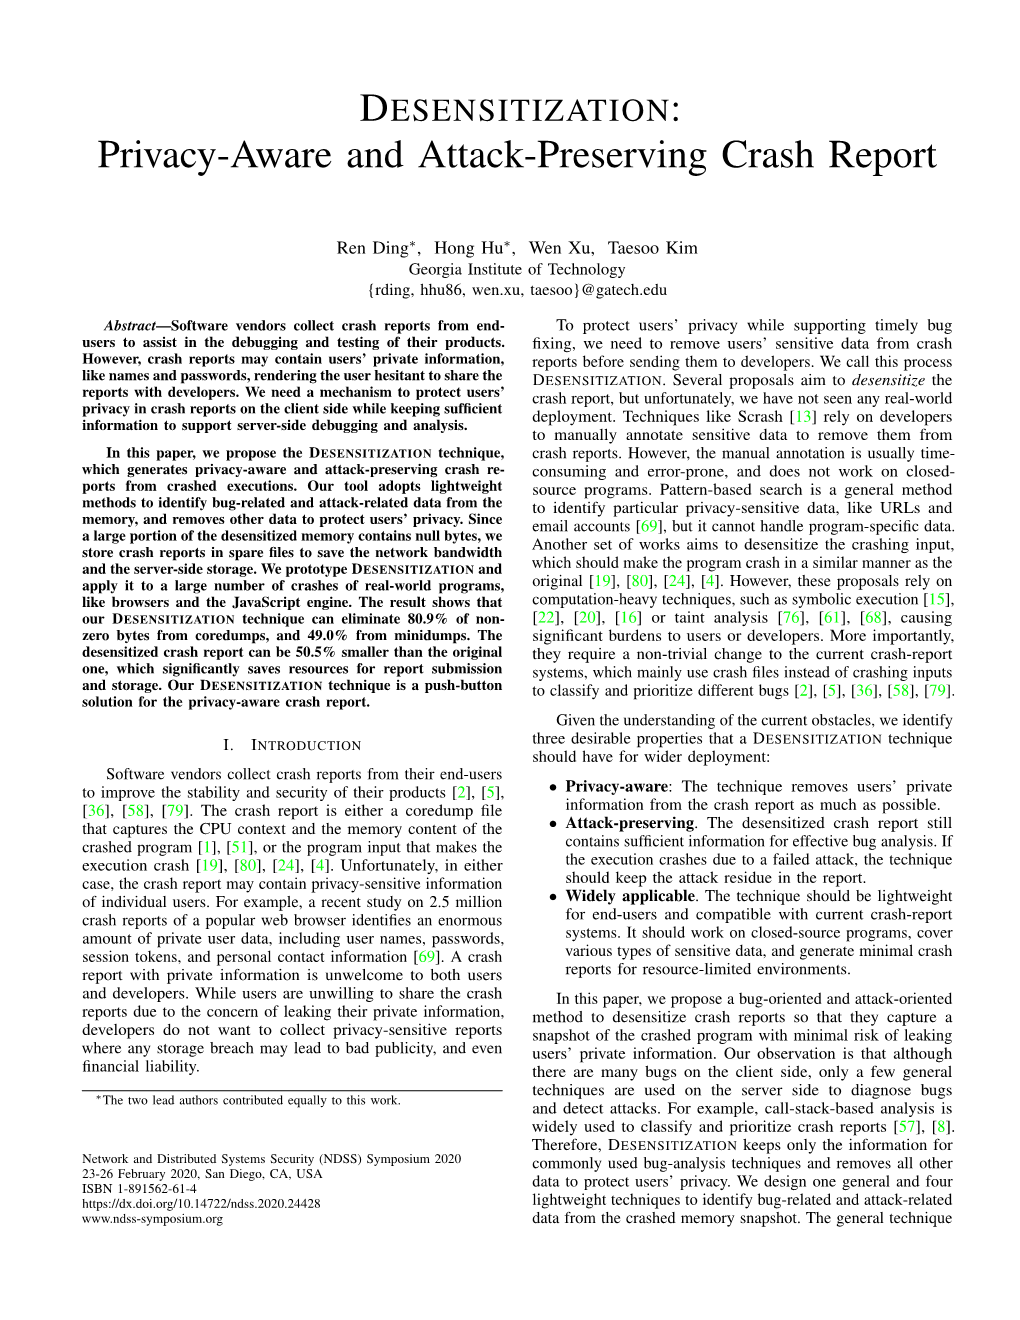 Privacy-Aware and Attack-Preserving Crash Report